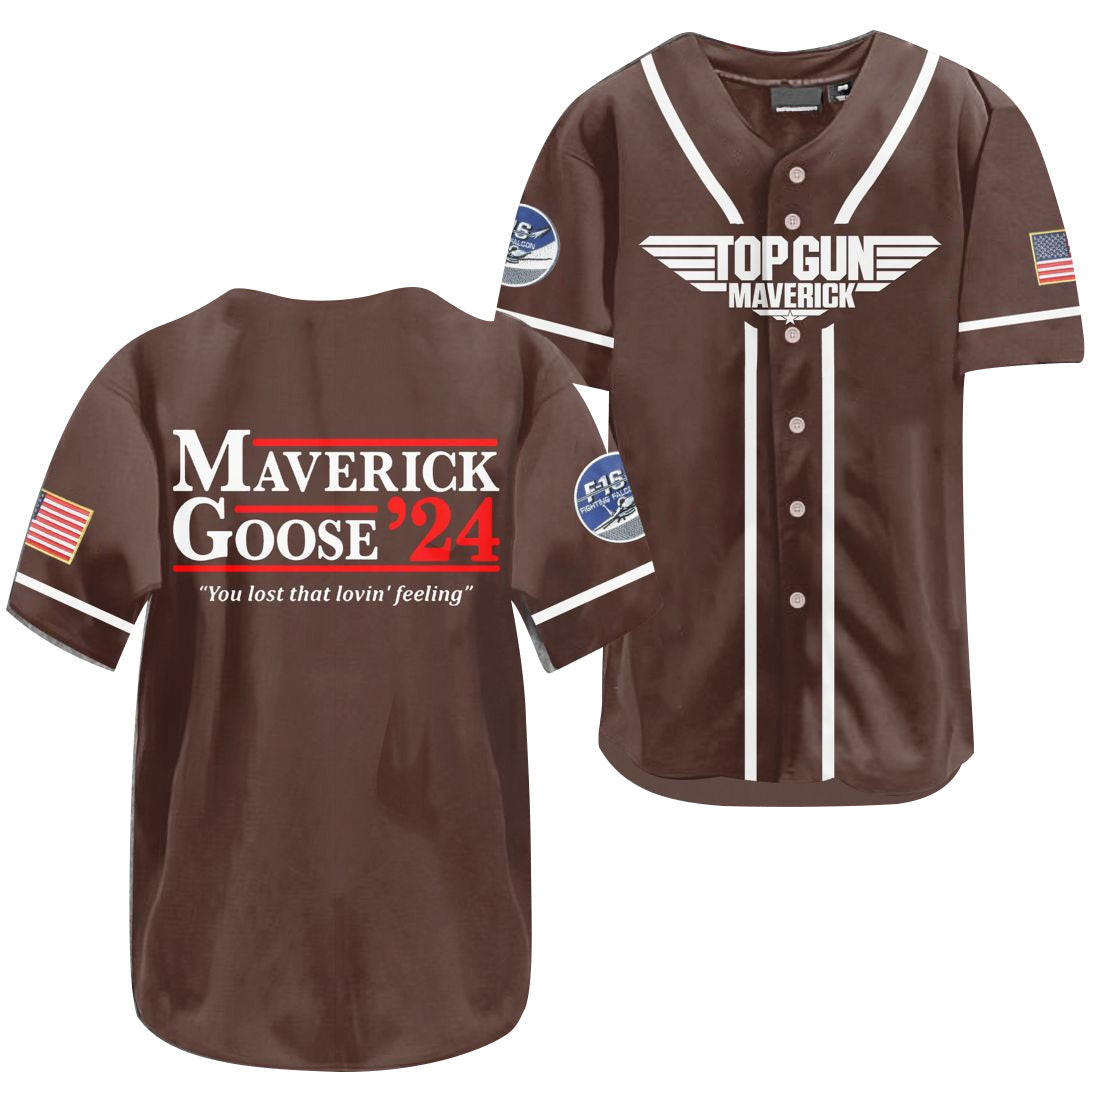 Top Gun Maverick Goose You Lost That Loving Feeling Baseball Jersey